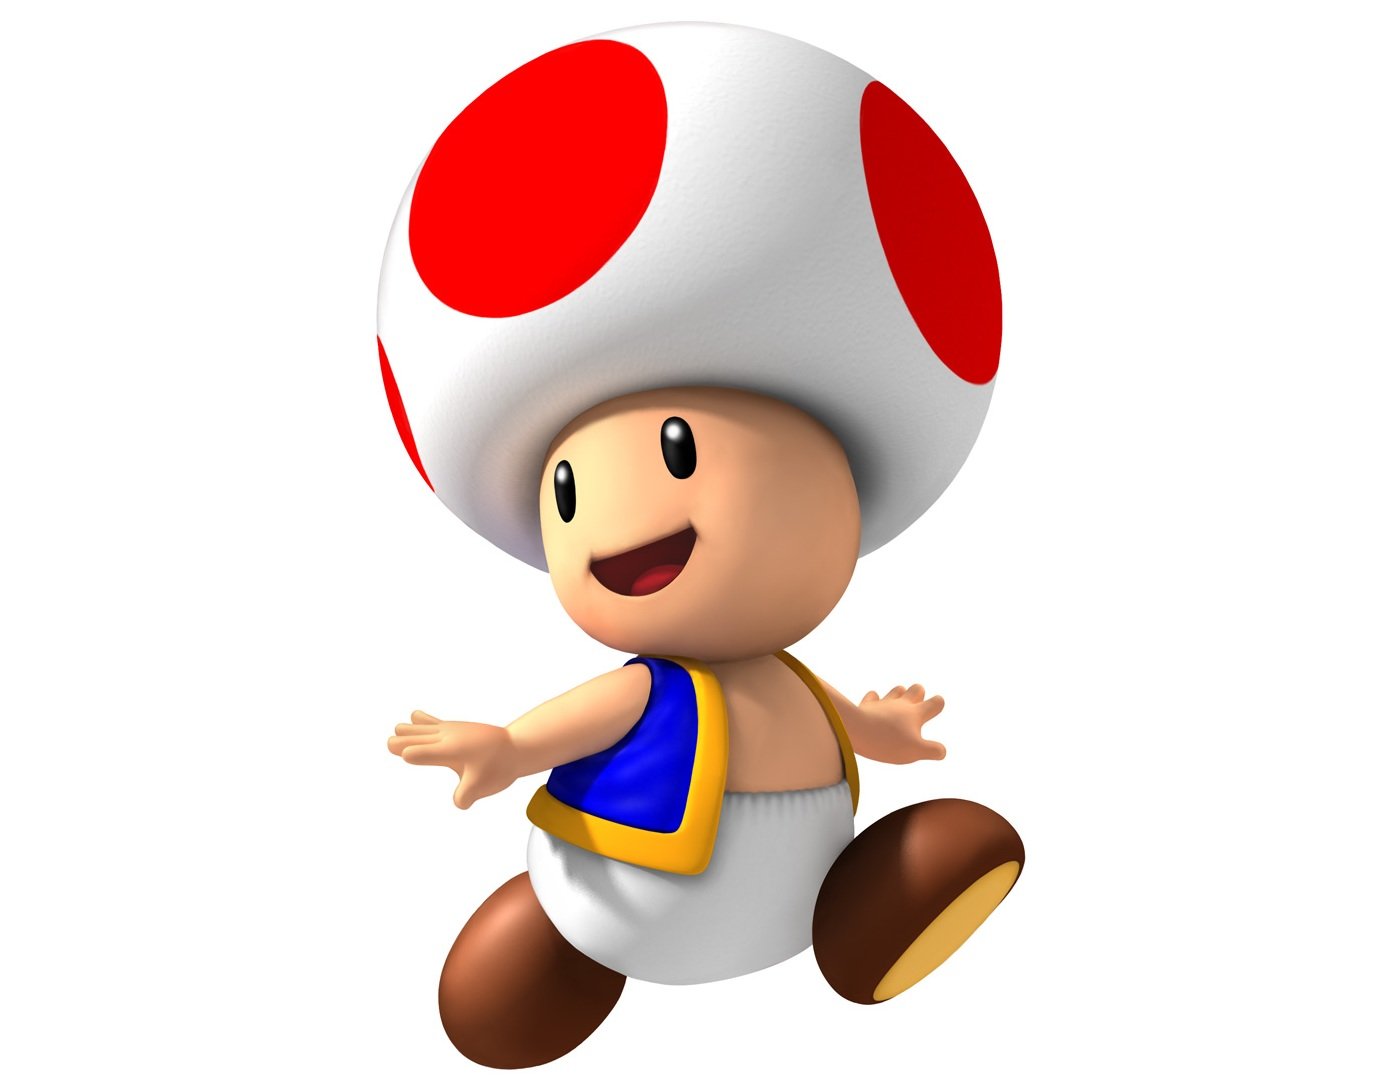 A dick like the mushroom character from mario kart